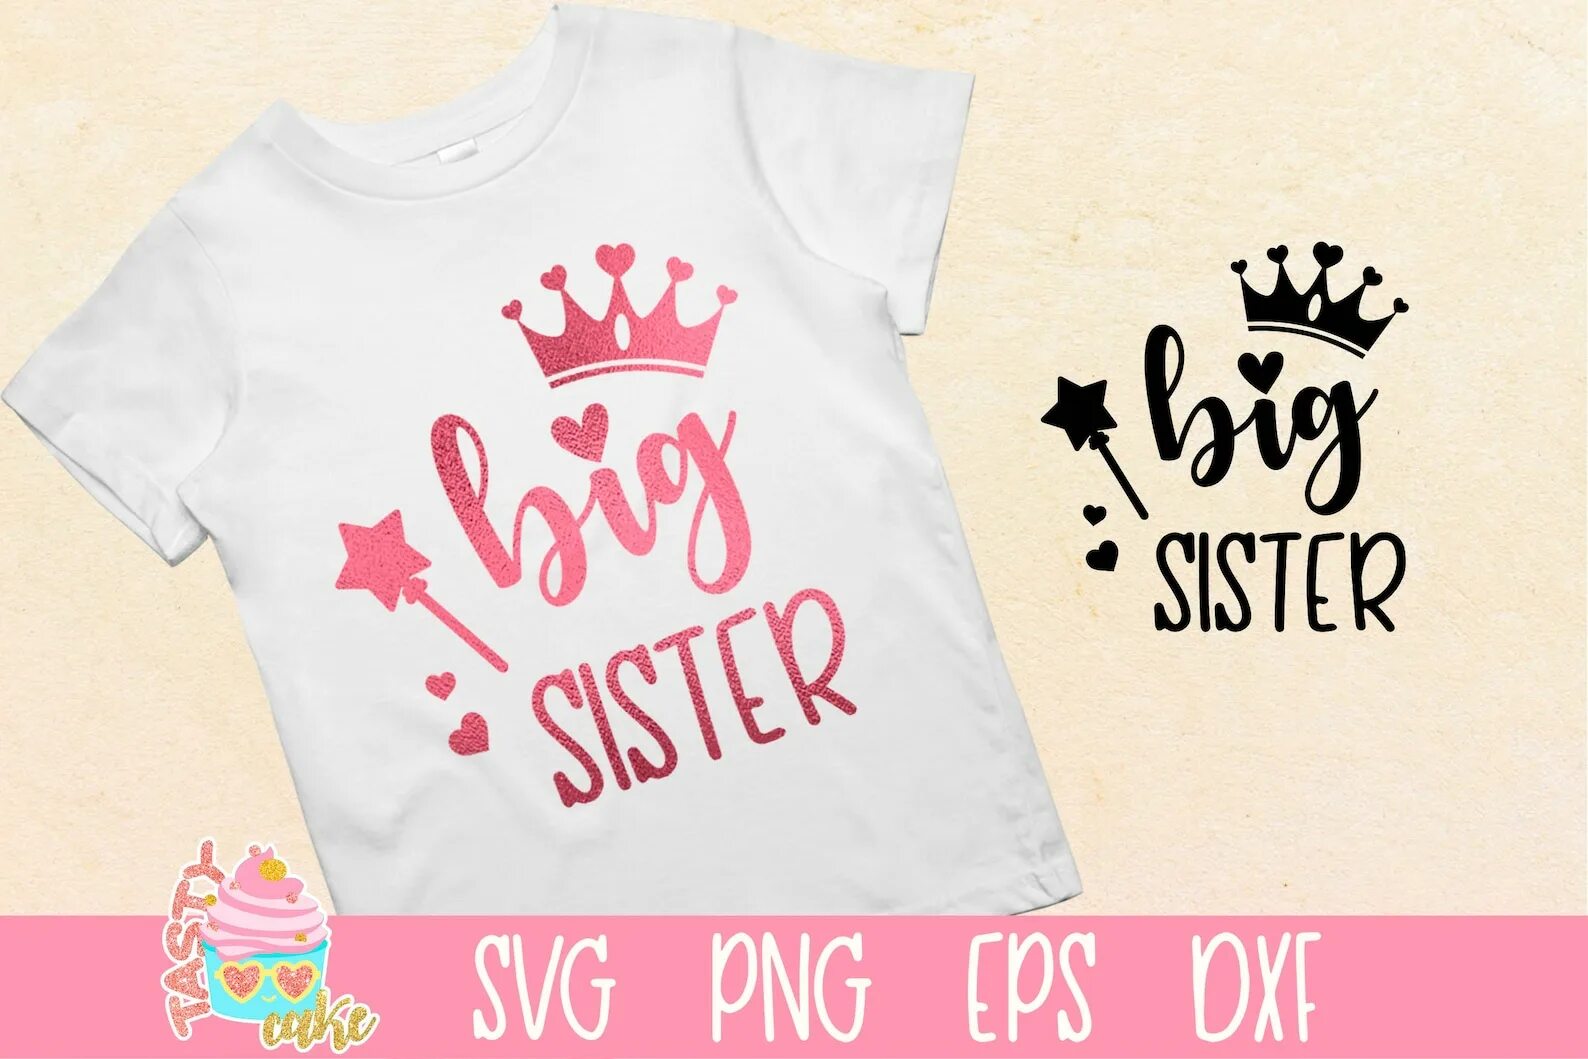 Nippy sister. Big sister надпись. Старшая сестренка принт. Big sister little sister шаблон для печати. Надпись best big sister.